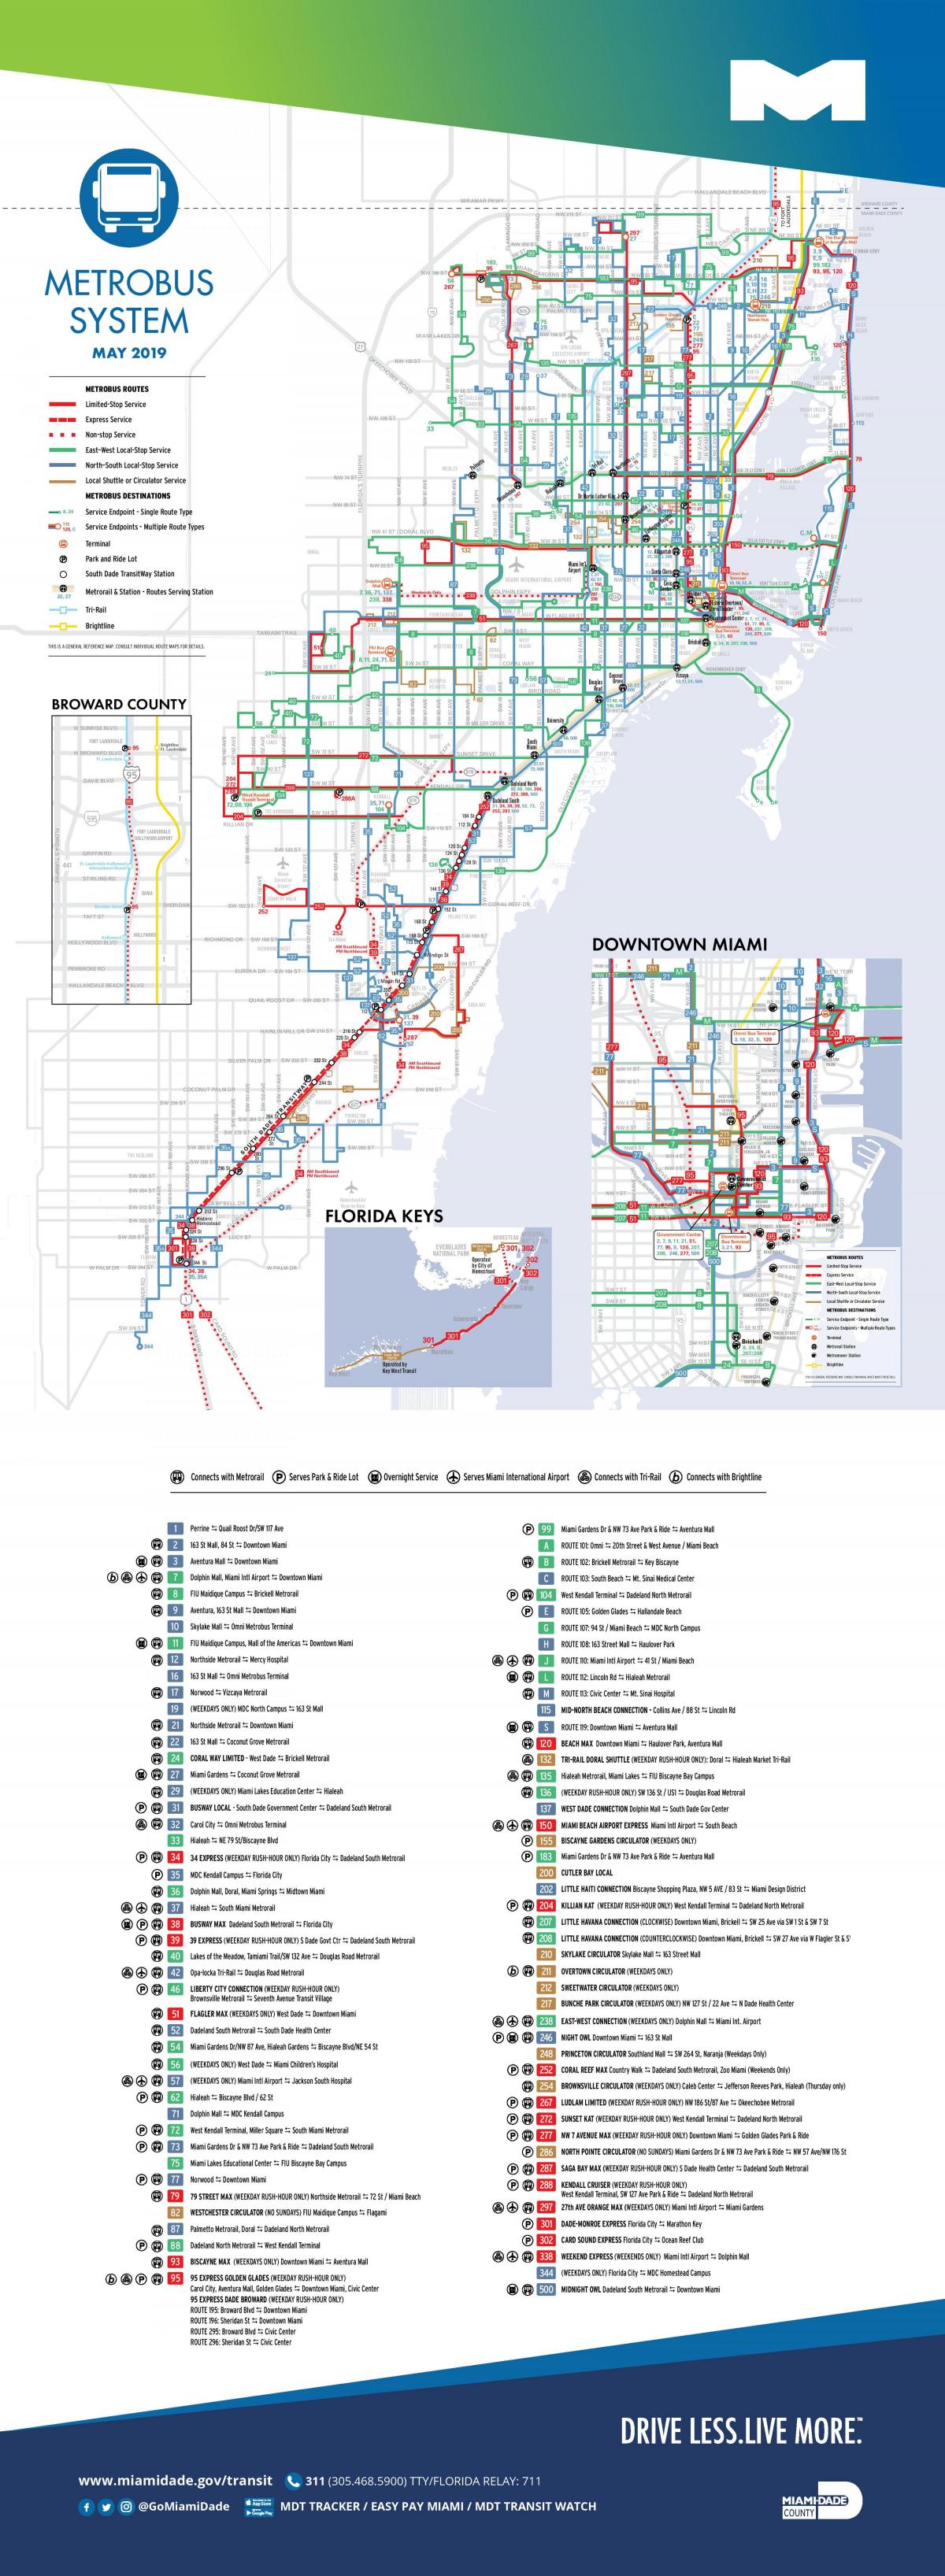 Plan des transports publics de Miami